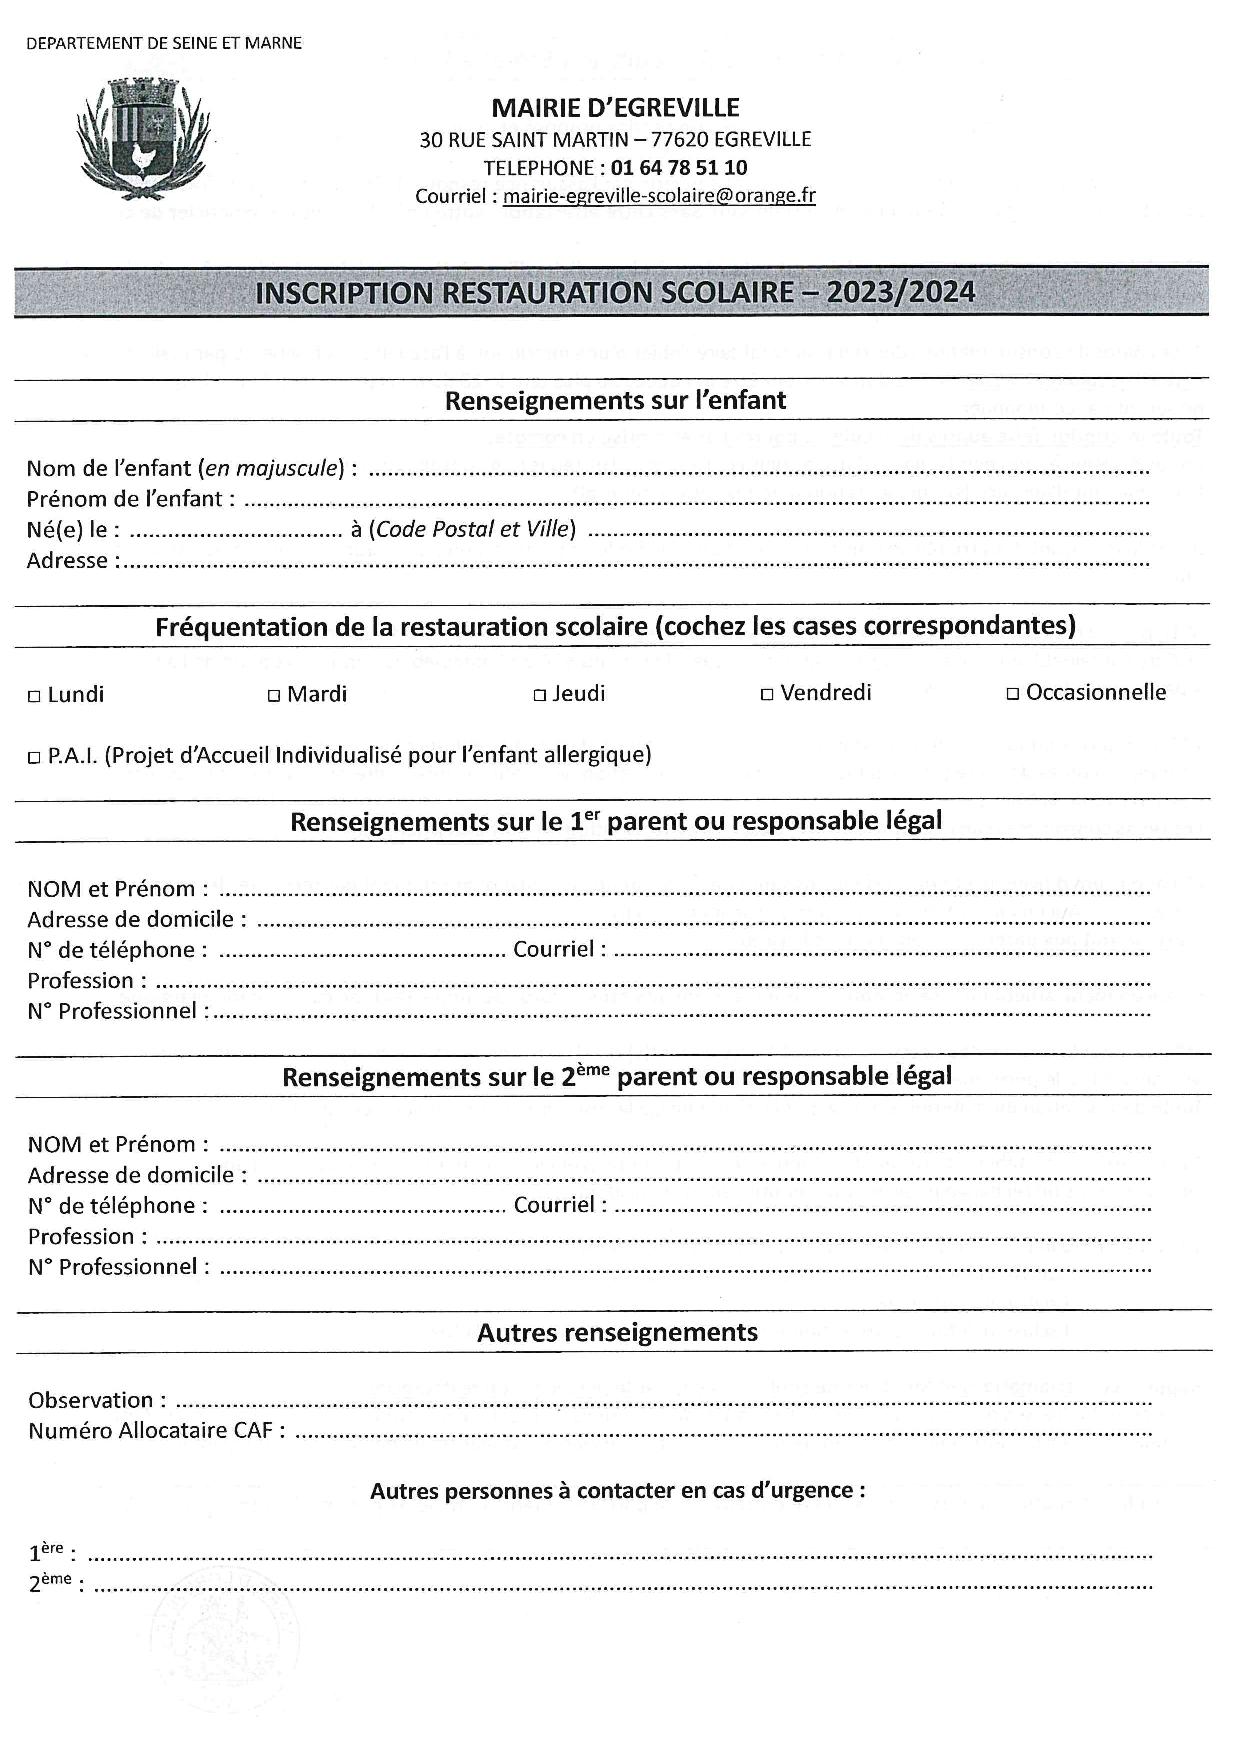 Formulaire restauration scolaire  -  PDF - 1 Mo